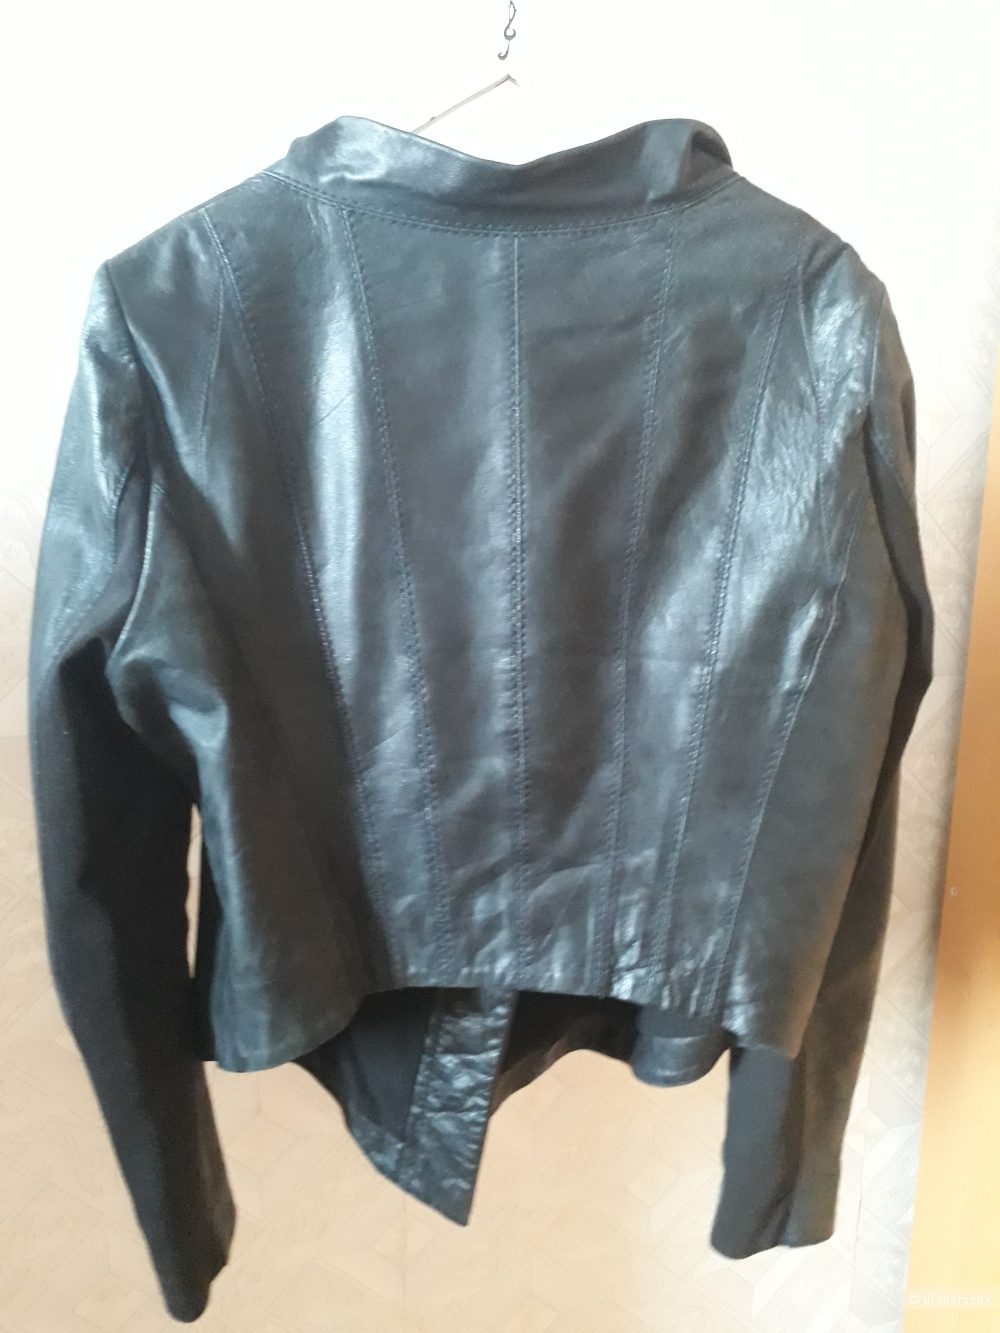 Куртка кожаная BSBGMAXAZRIA (M)